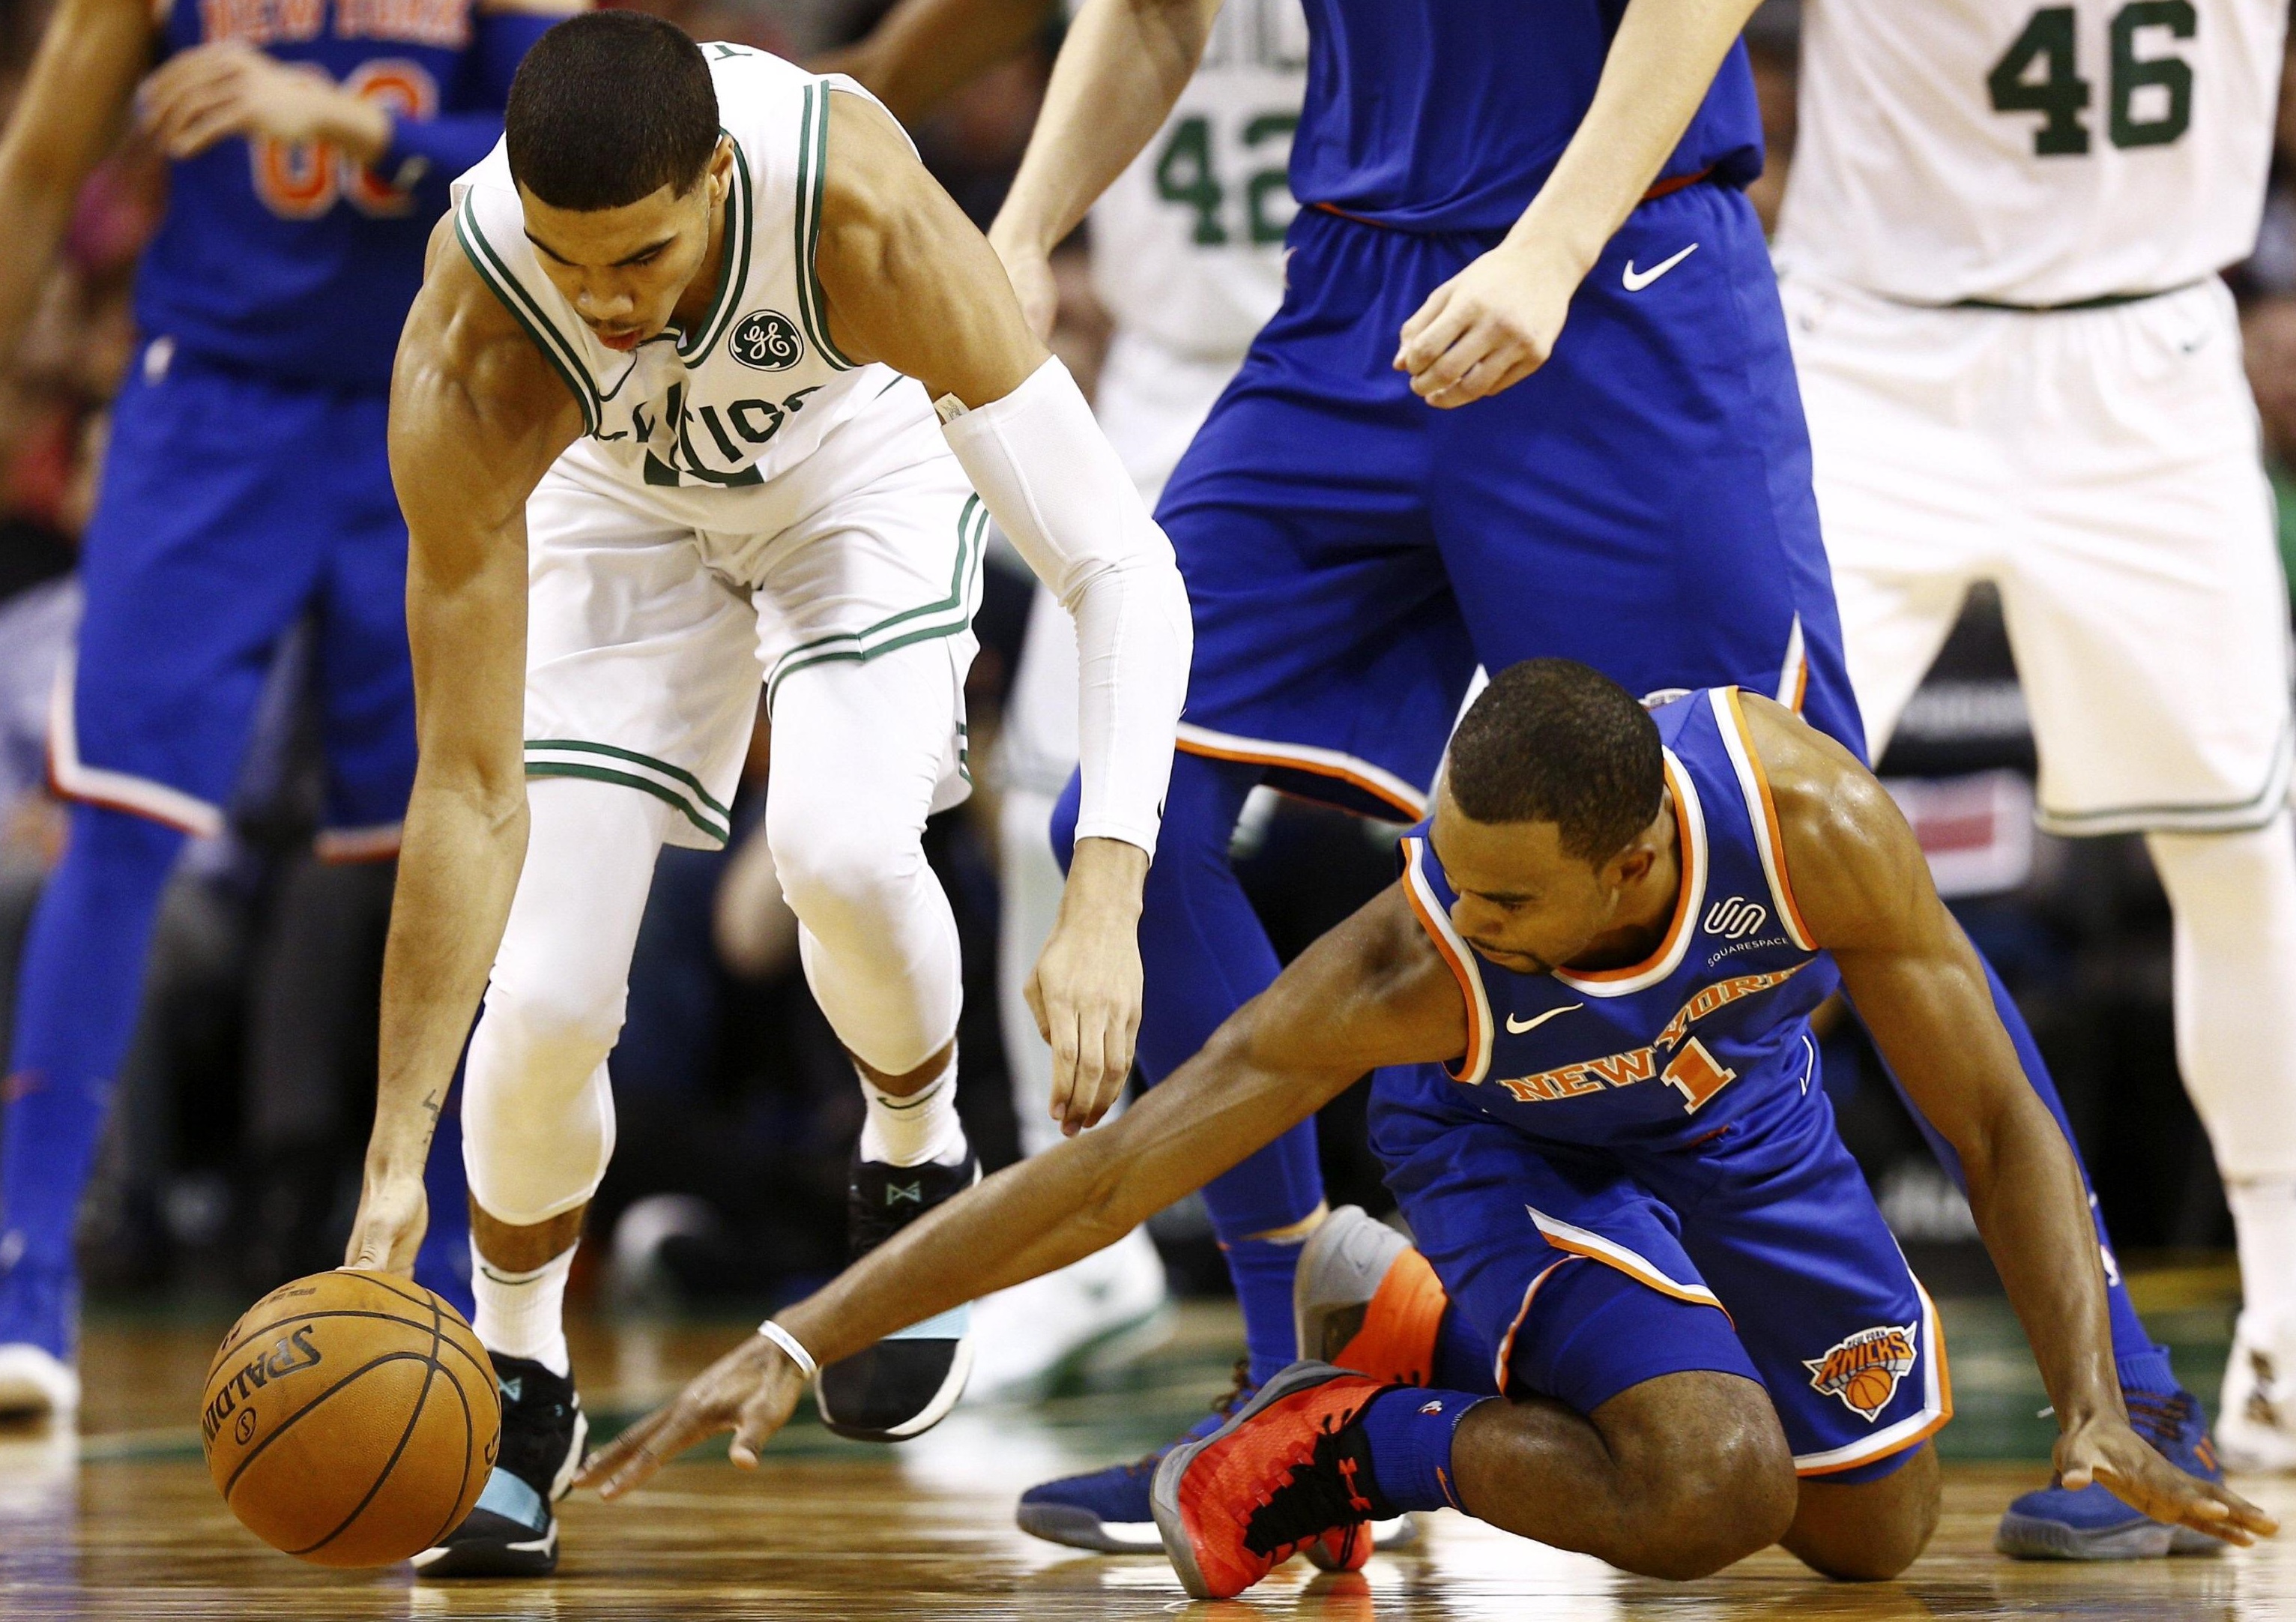 L'ala dei Celtics Jayson Tatum ruba la palla a Ramon Sessions, guardia dei Knicks